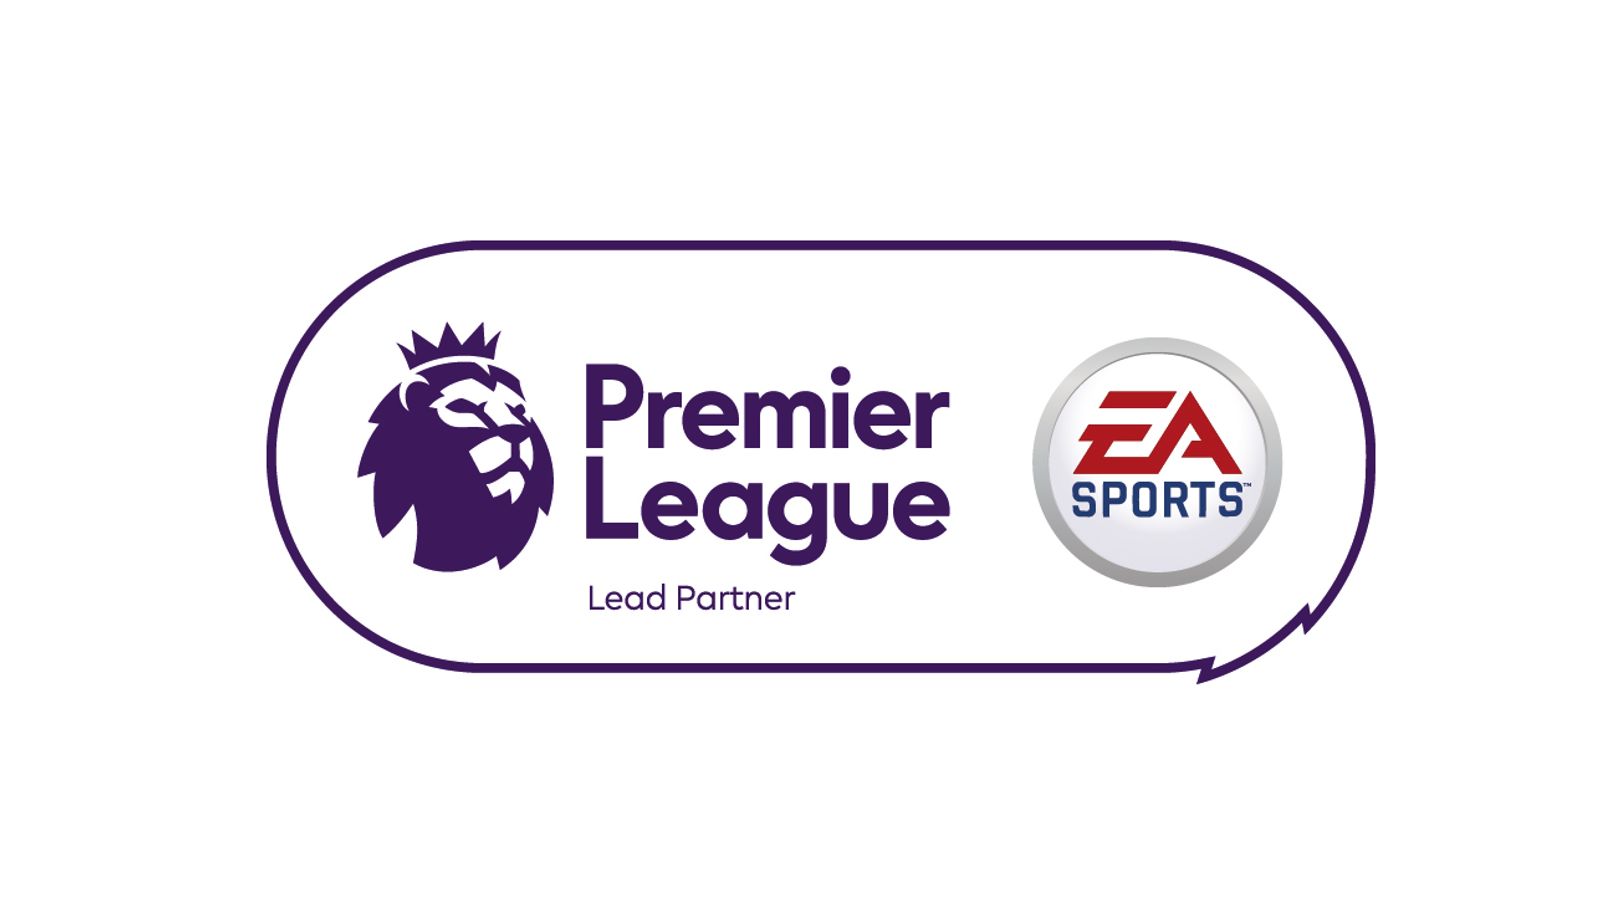 Спортс лига. Premier League and EA Sports. Premier. Испанская премьер лига EA Sports. Lead your partner.